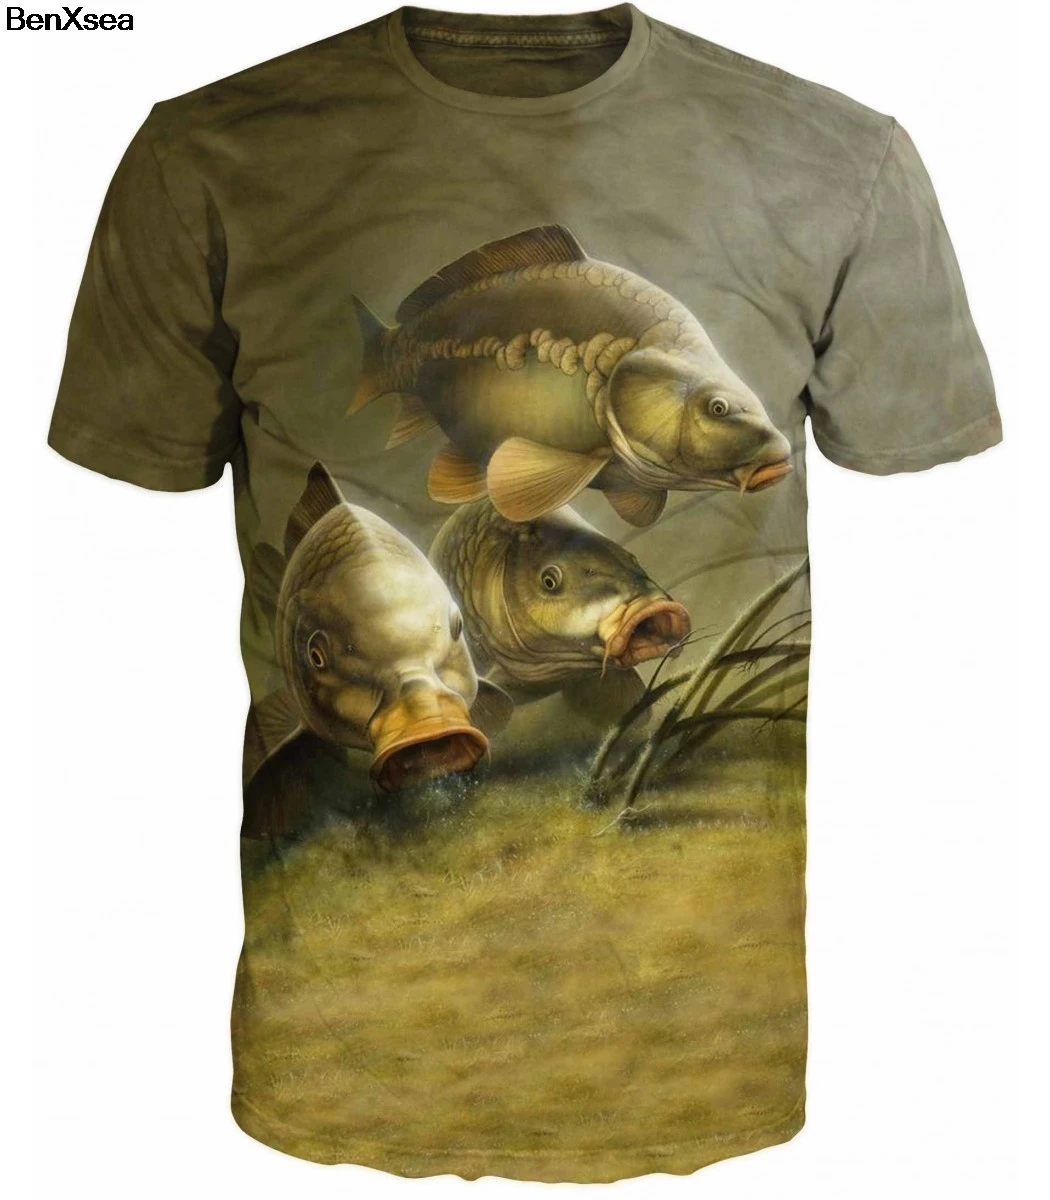 Carp Fishing T-Shirt 